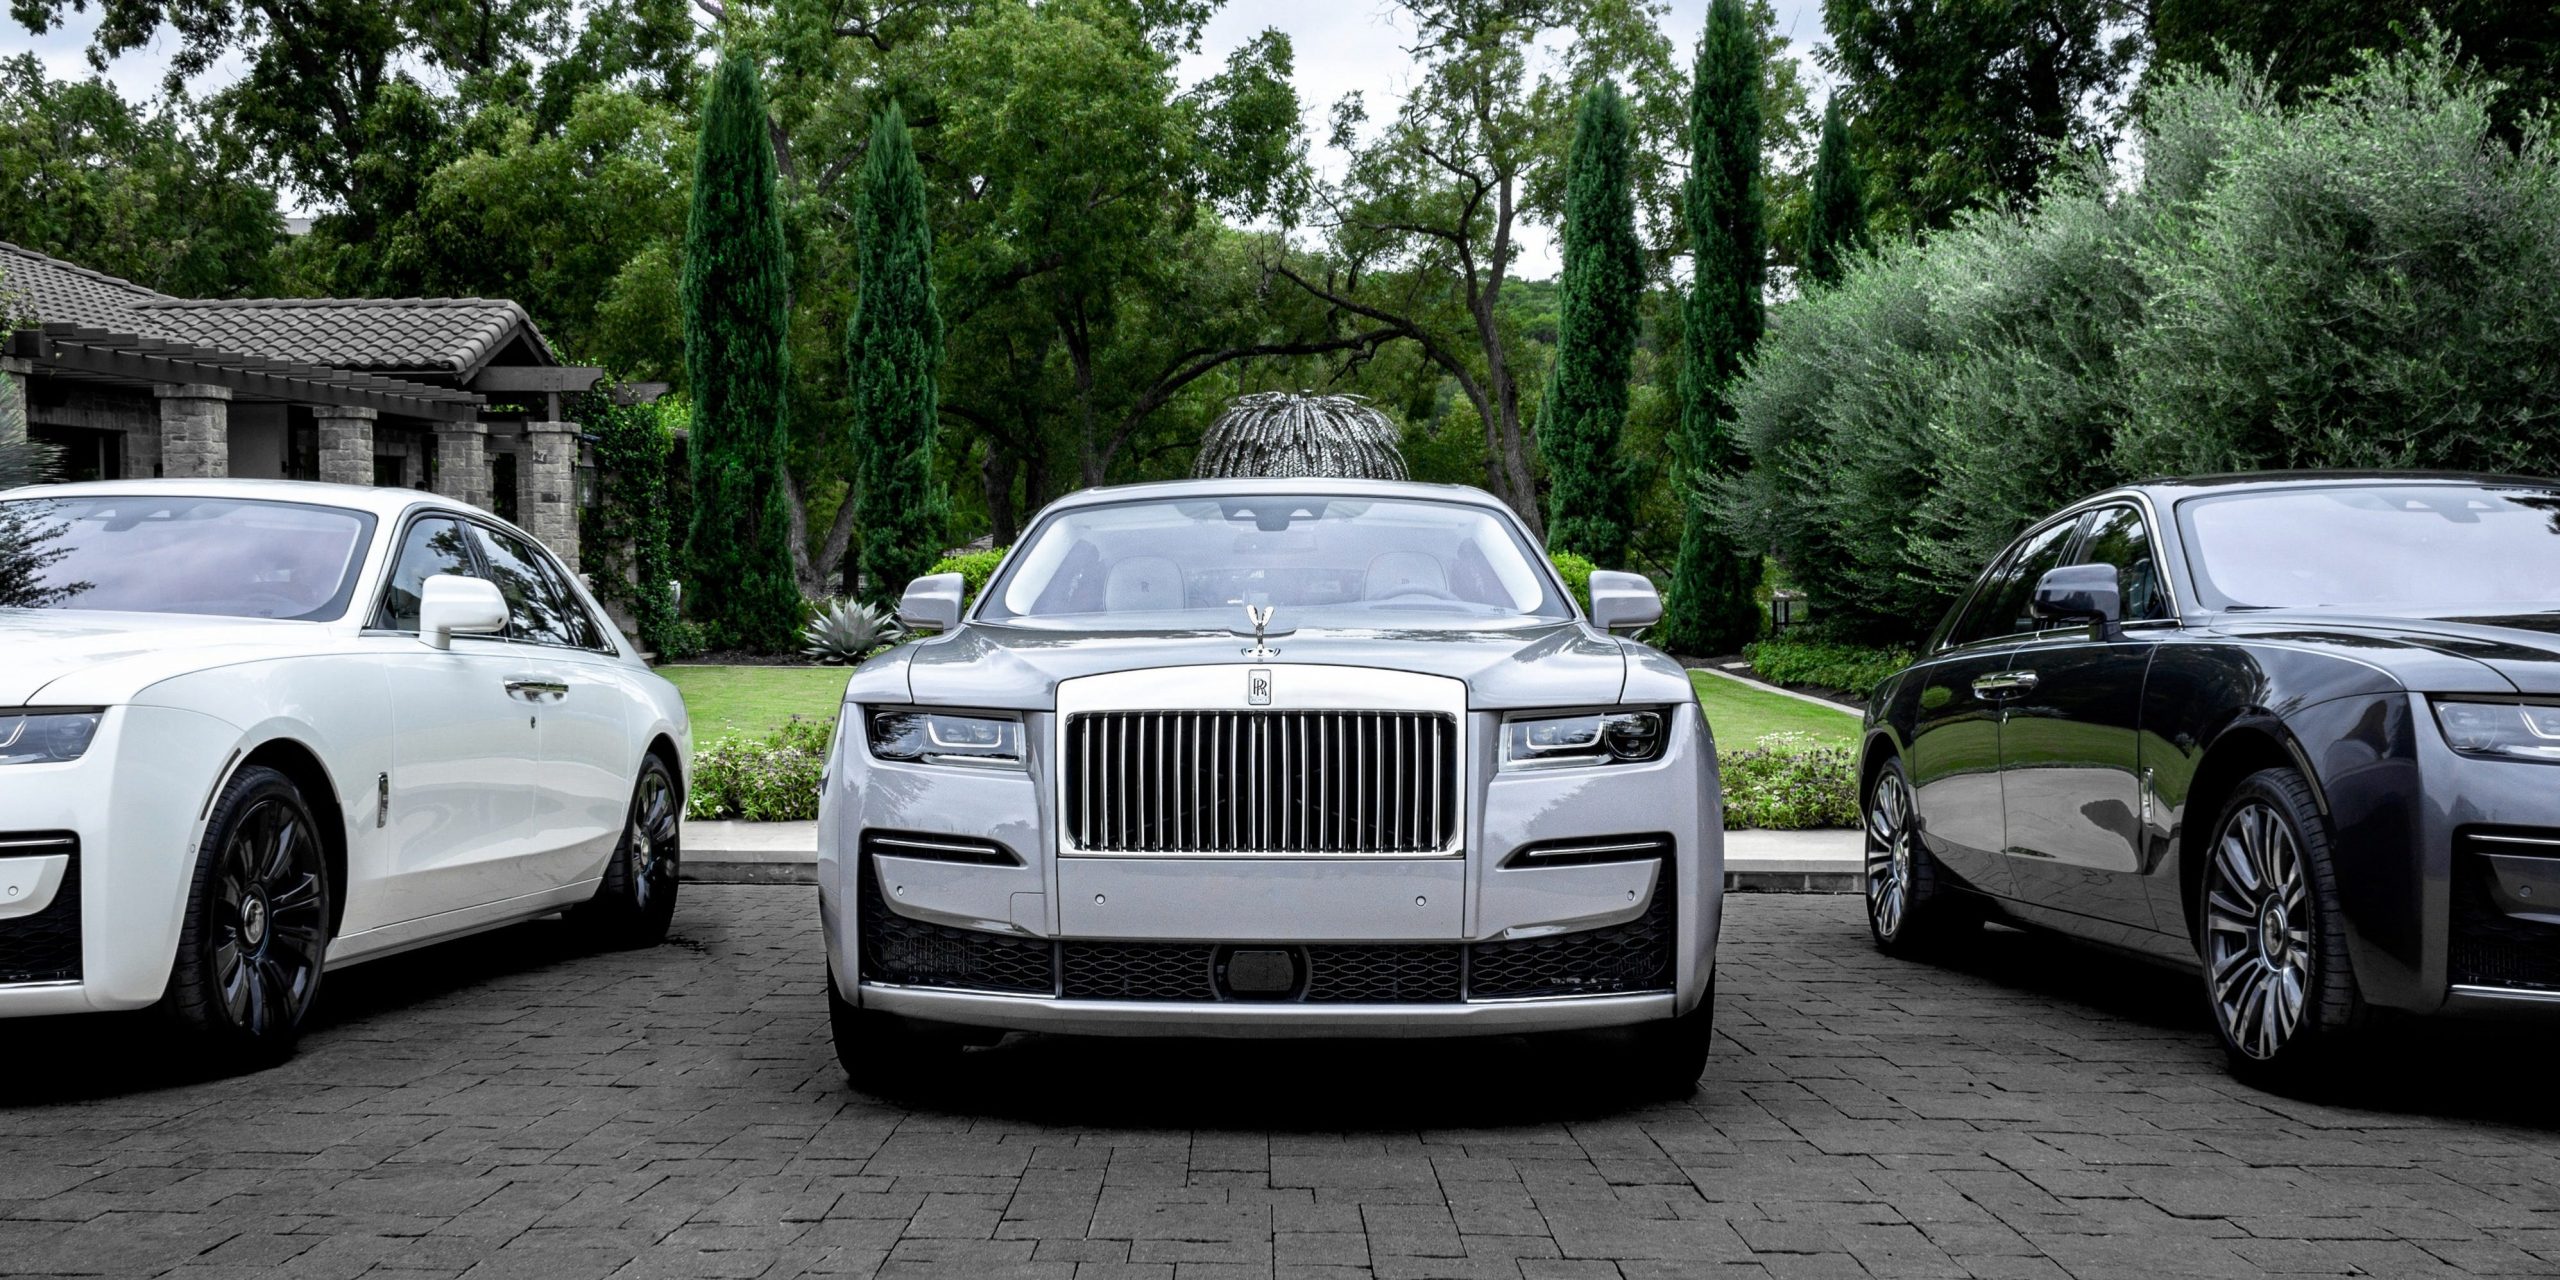 The Rolls-Royce Ghost.